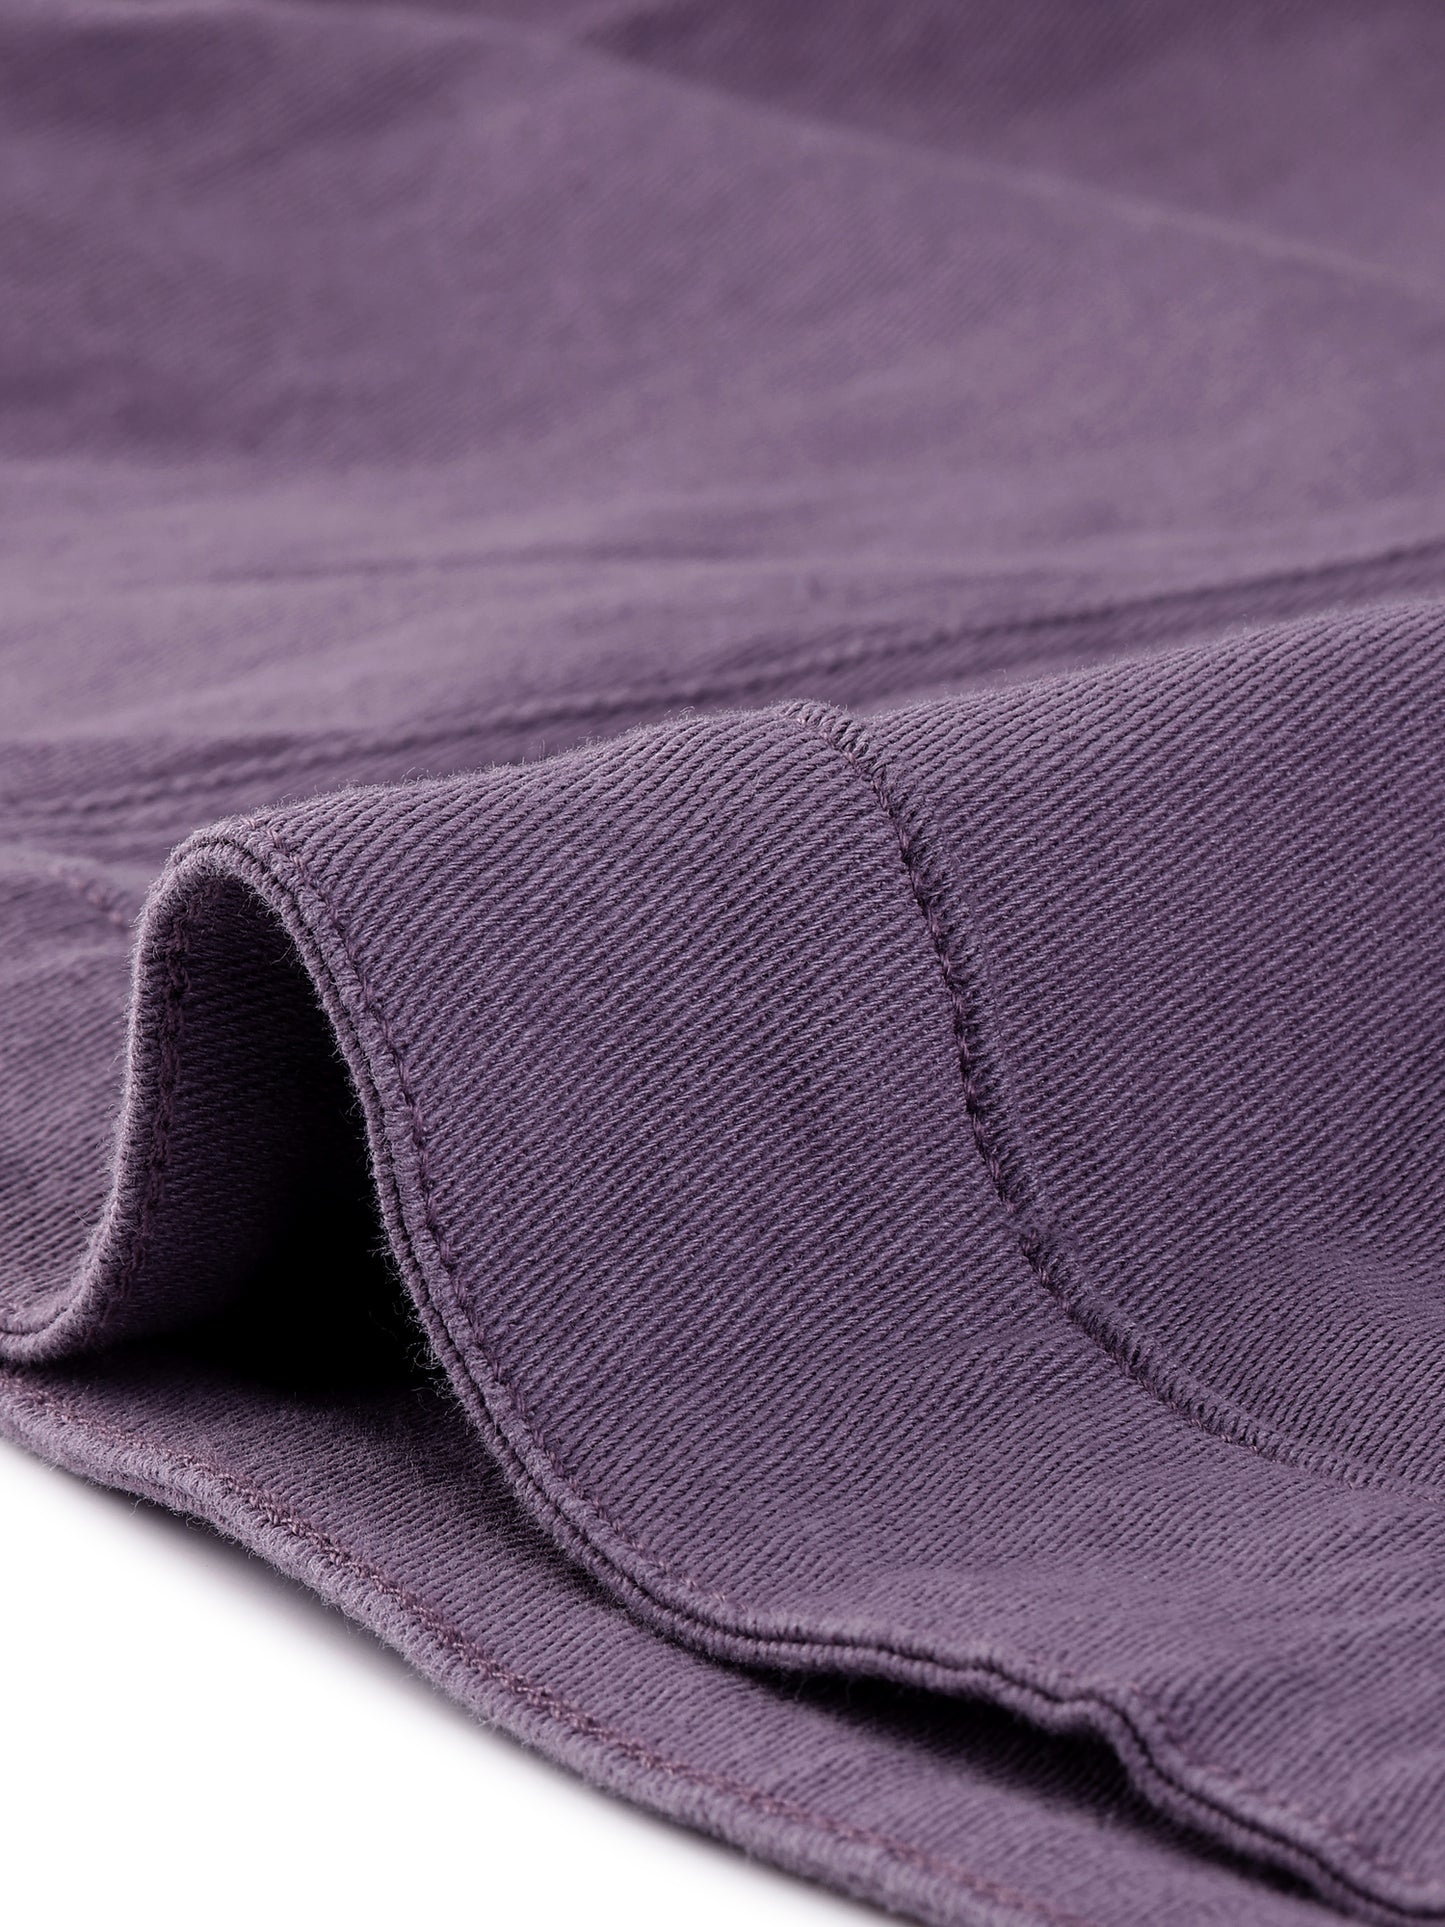 Agnes Orinda Plus Size Stitching Button Front Washed Denim Purple